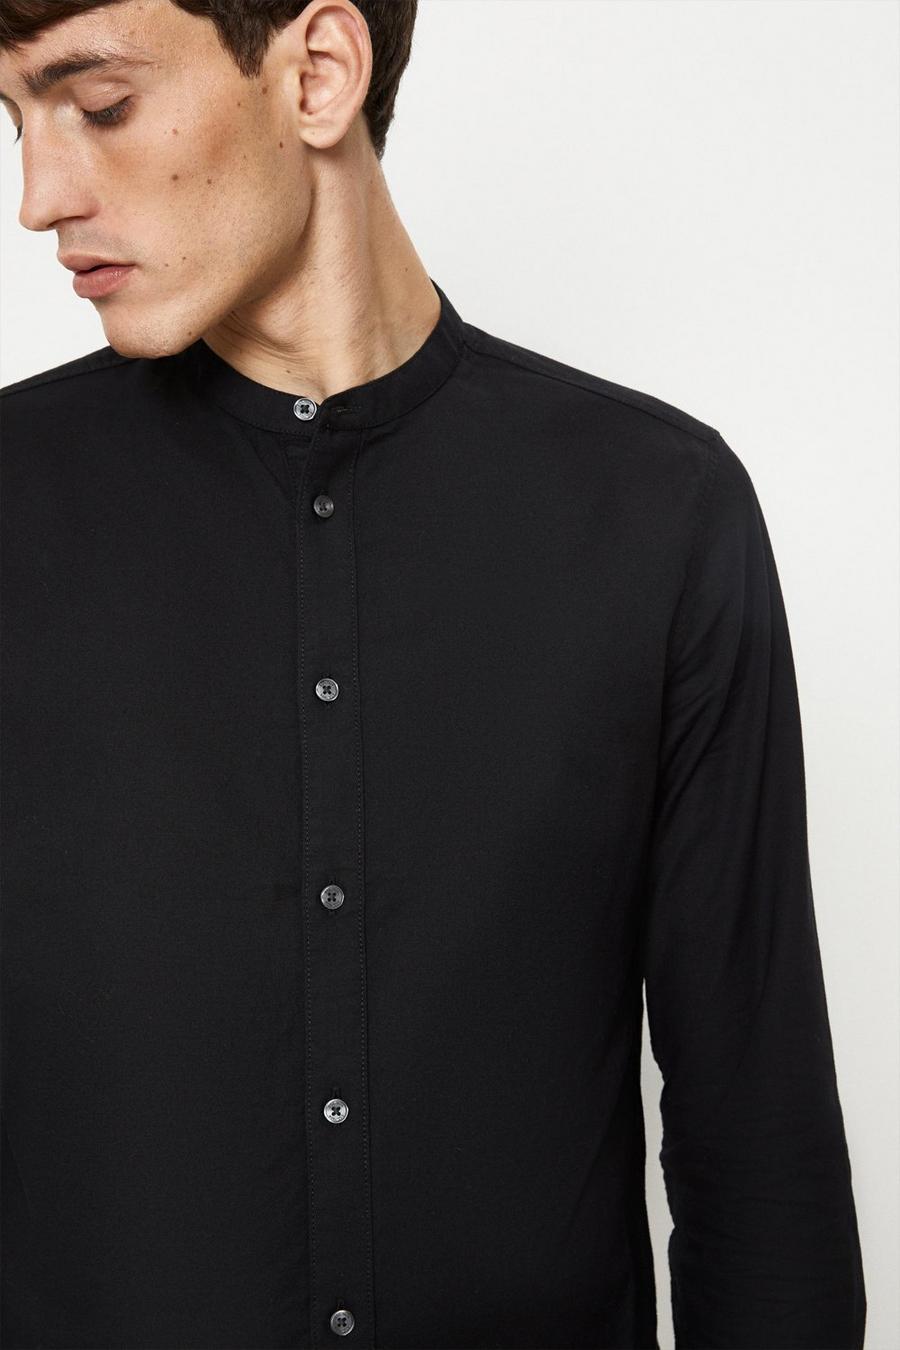 Long Sleeve Black Grandad Collar Oxford Shirt